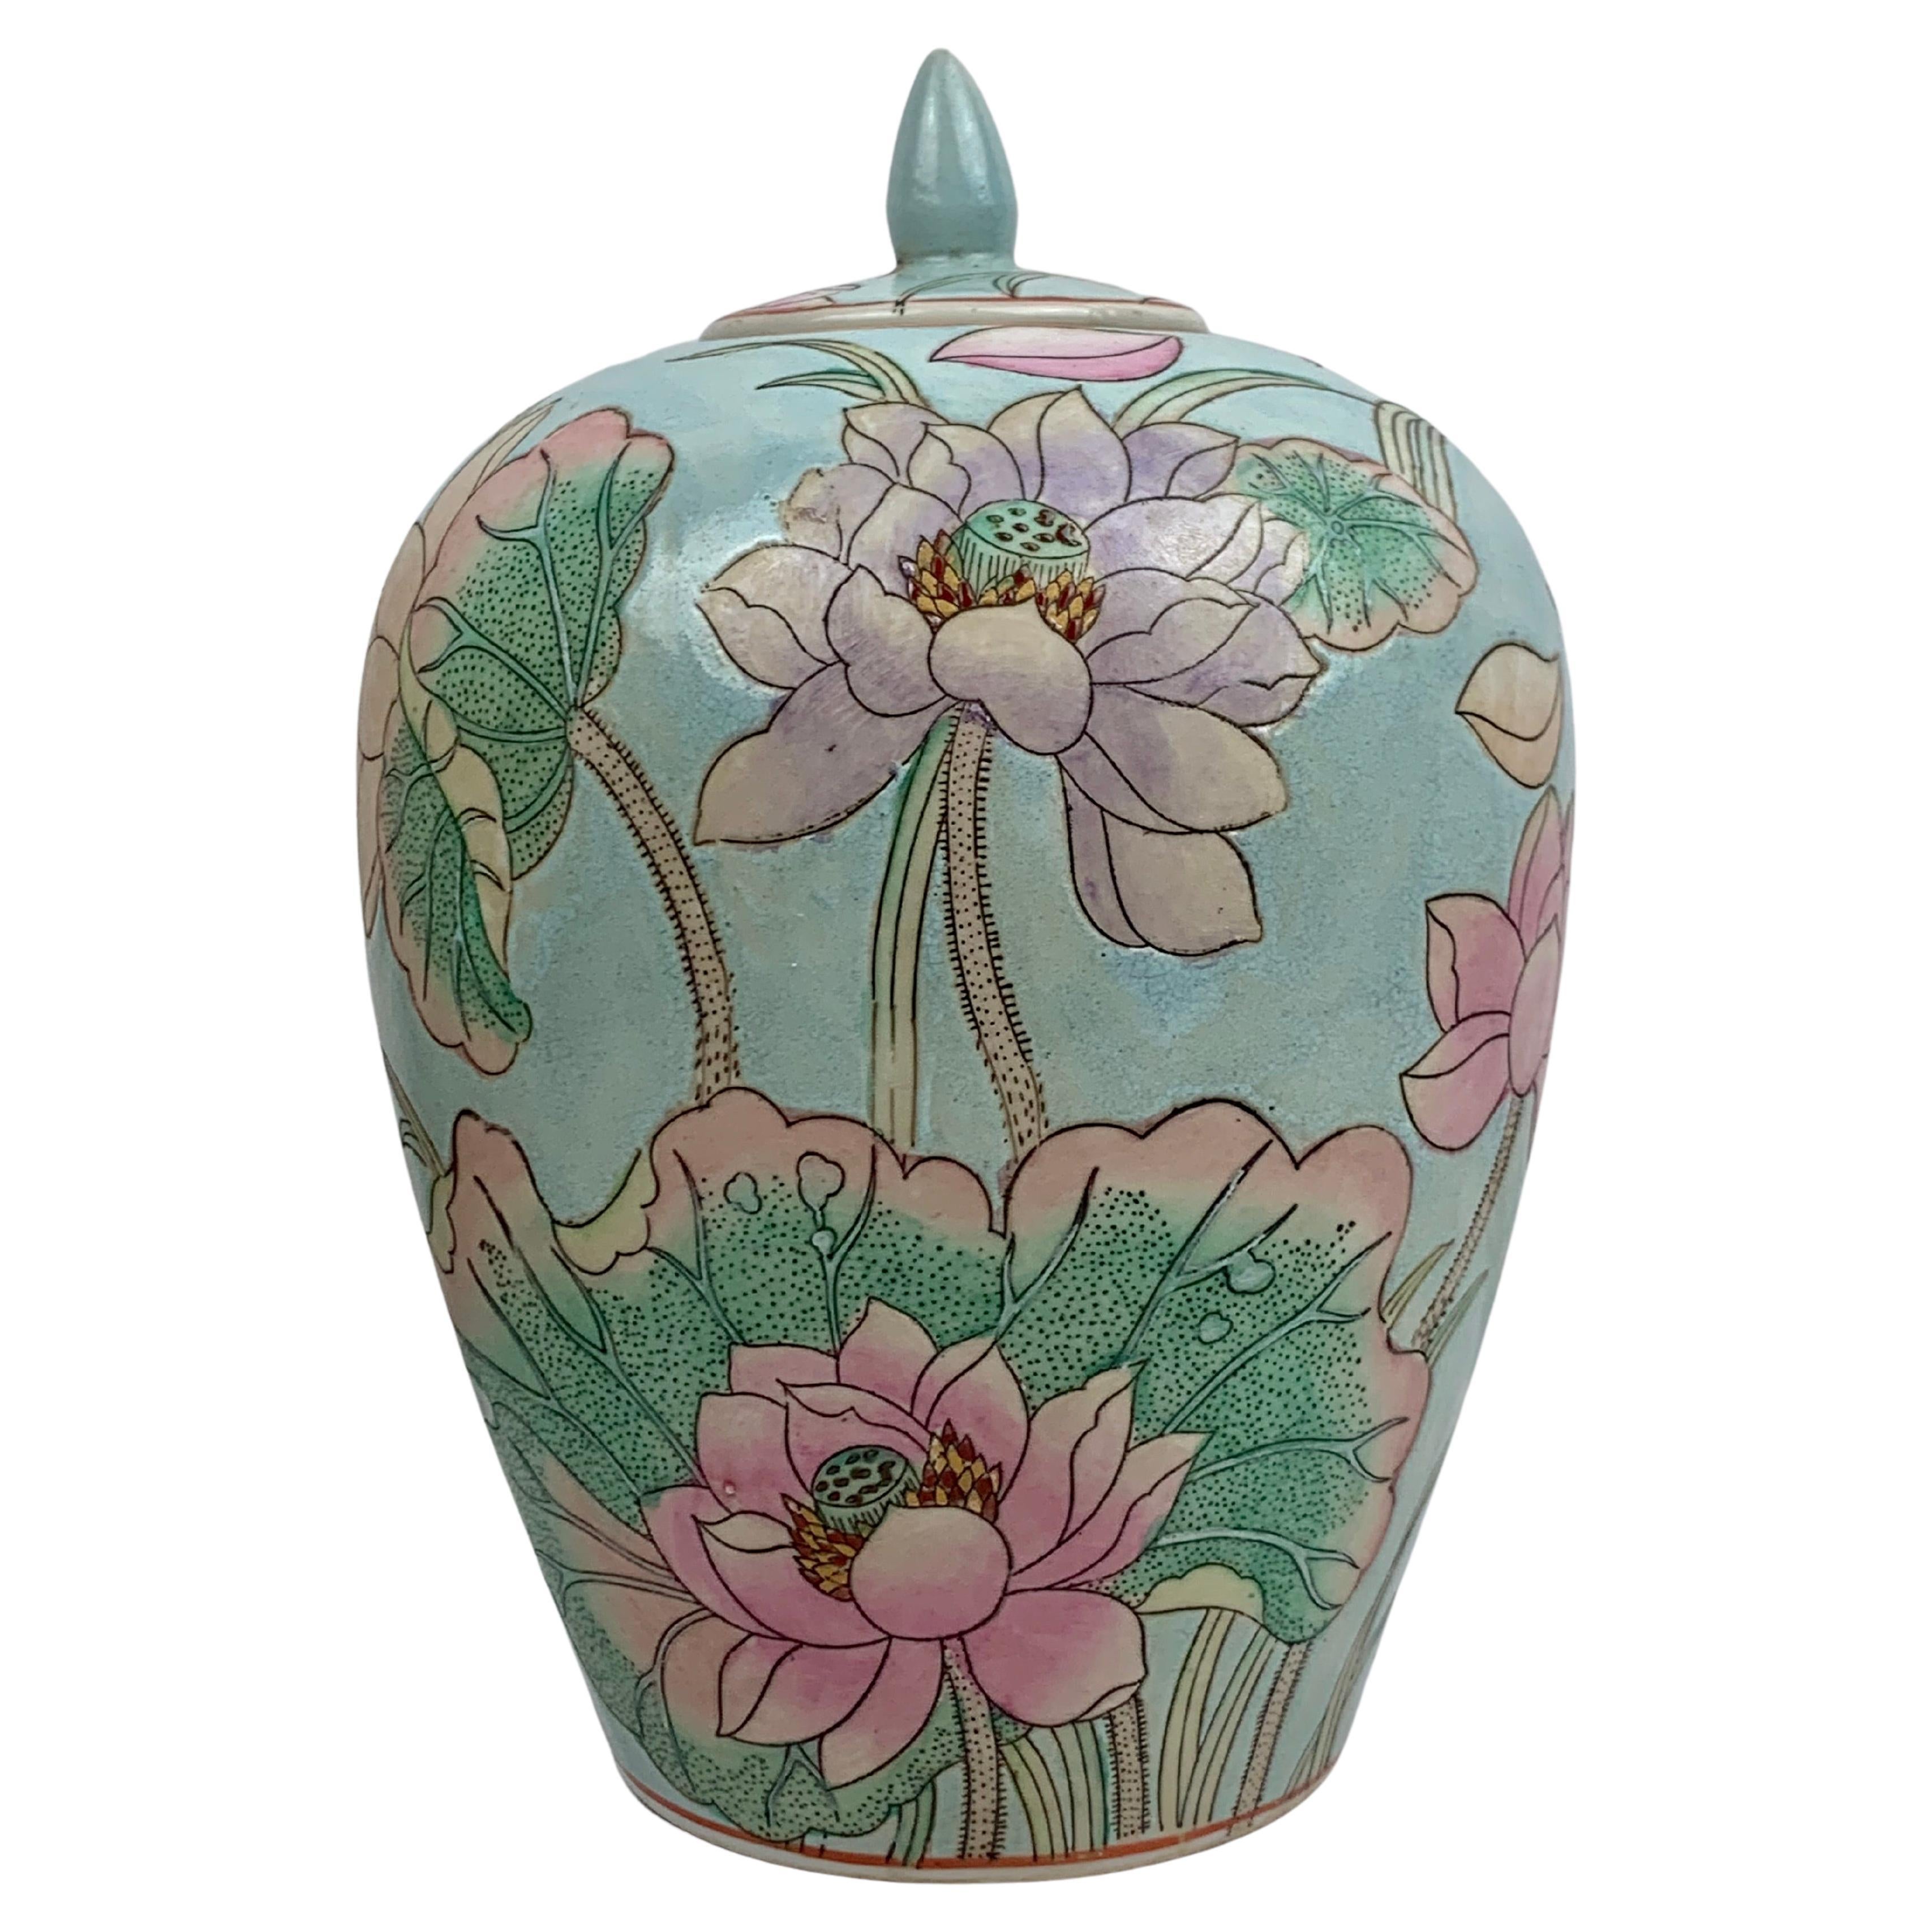 Hand Painted Porcelain Ginger Jar in Floral Pastel Colors